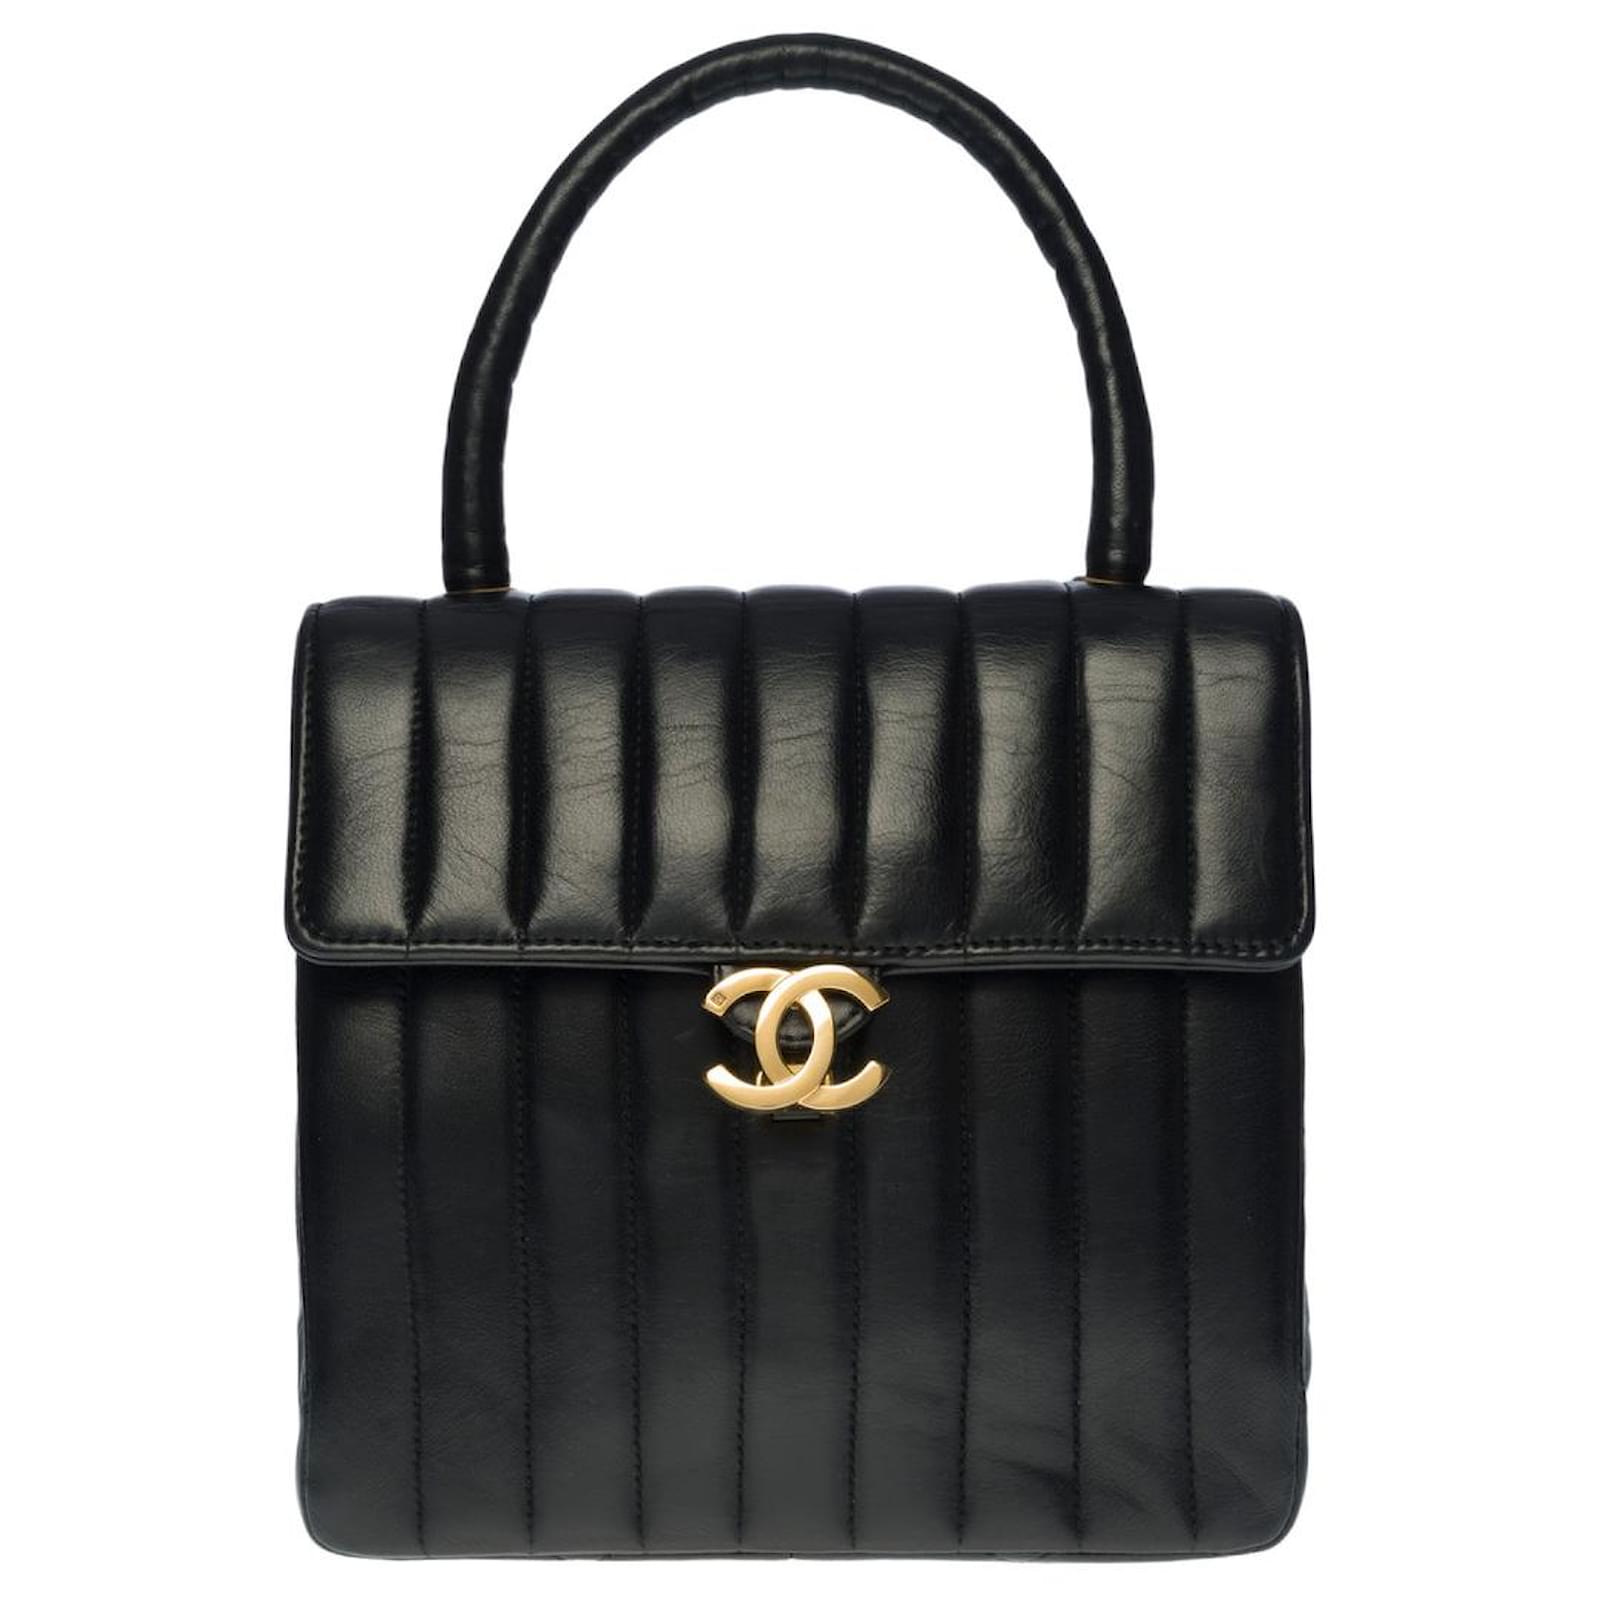 CHANEL, Bags, Rare New Chanel Mademoiselle Vintage Handbag